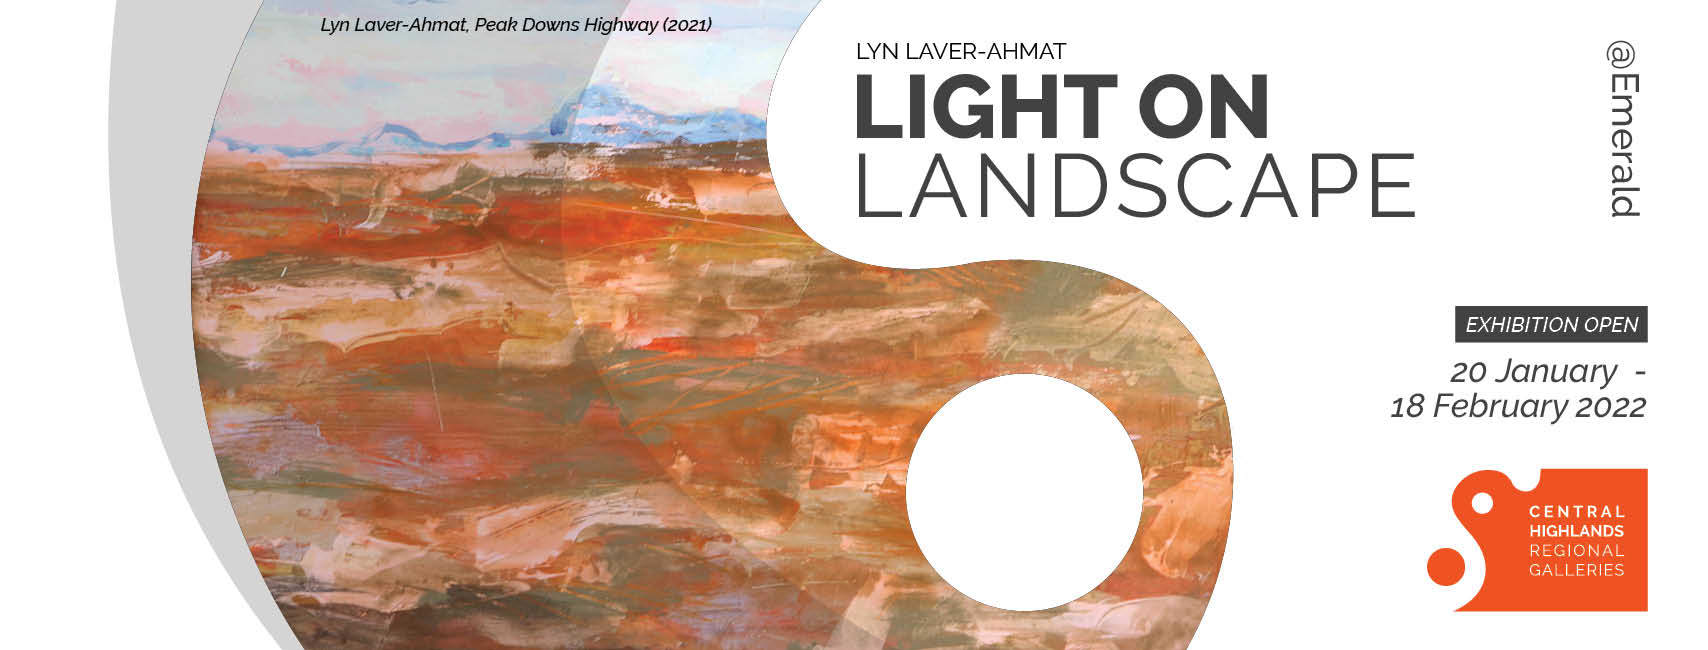 About Lyn Laver-Ahmat